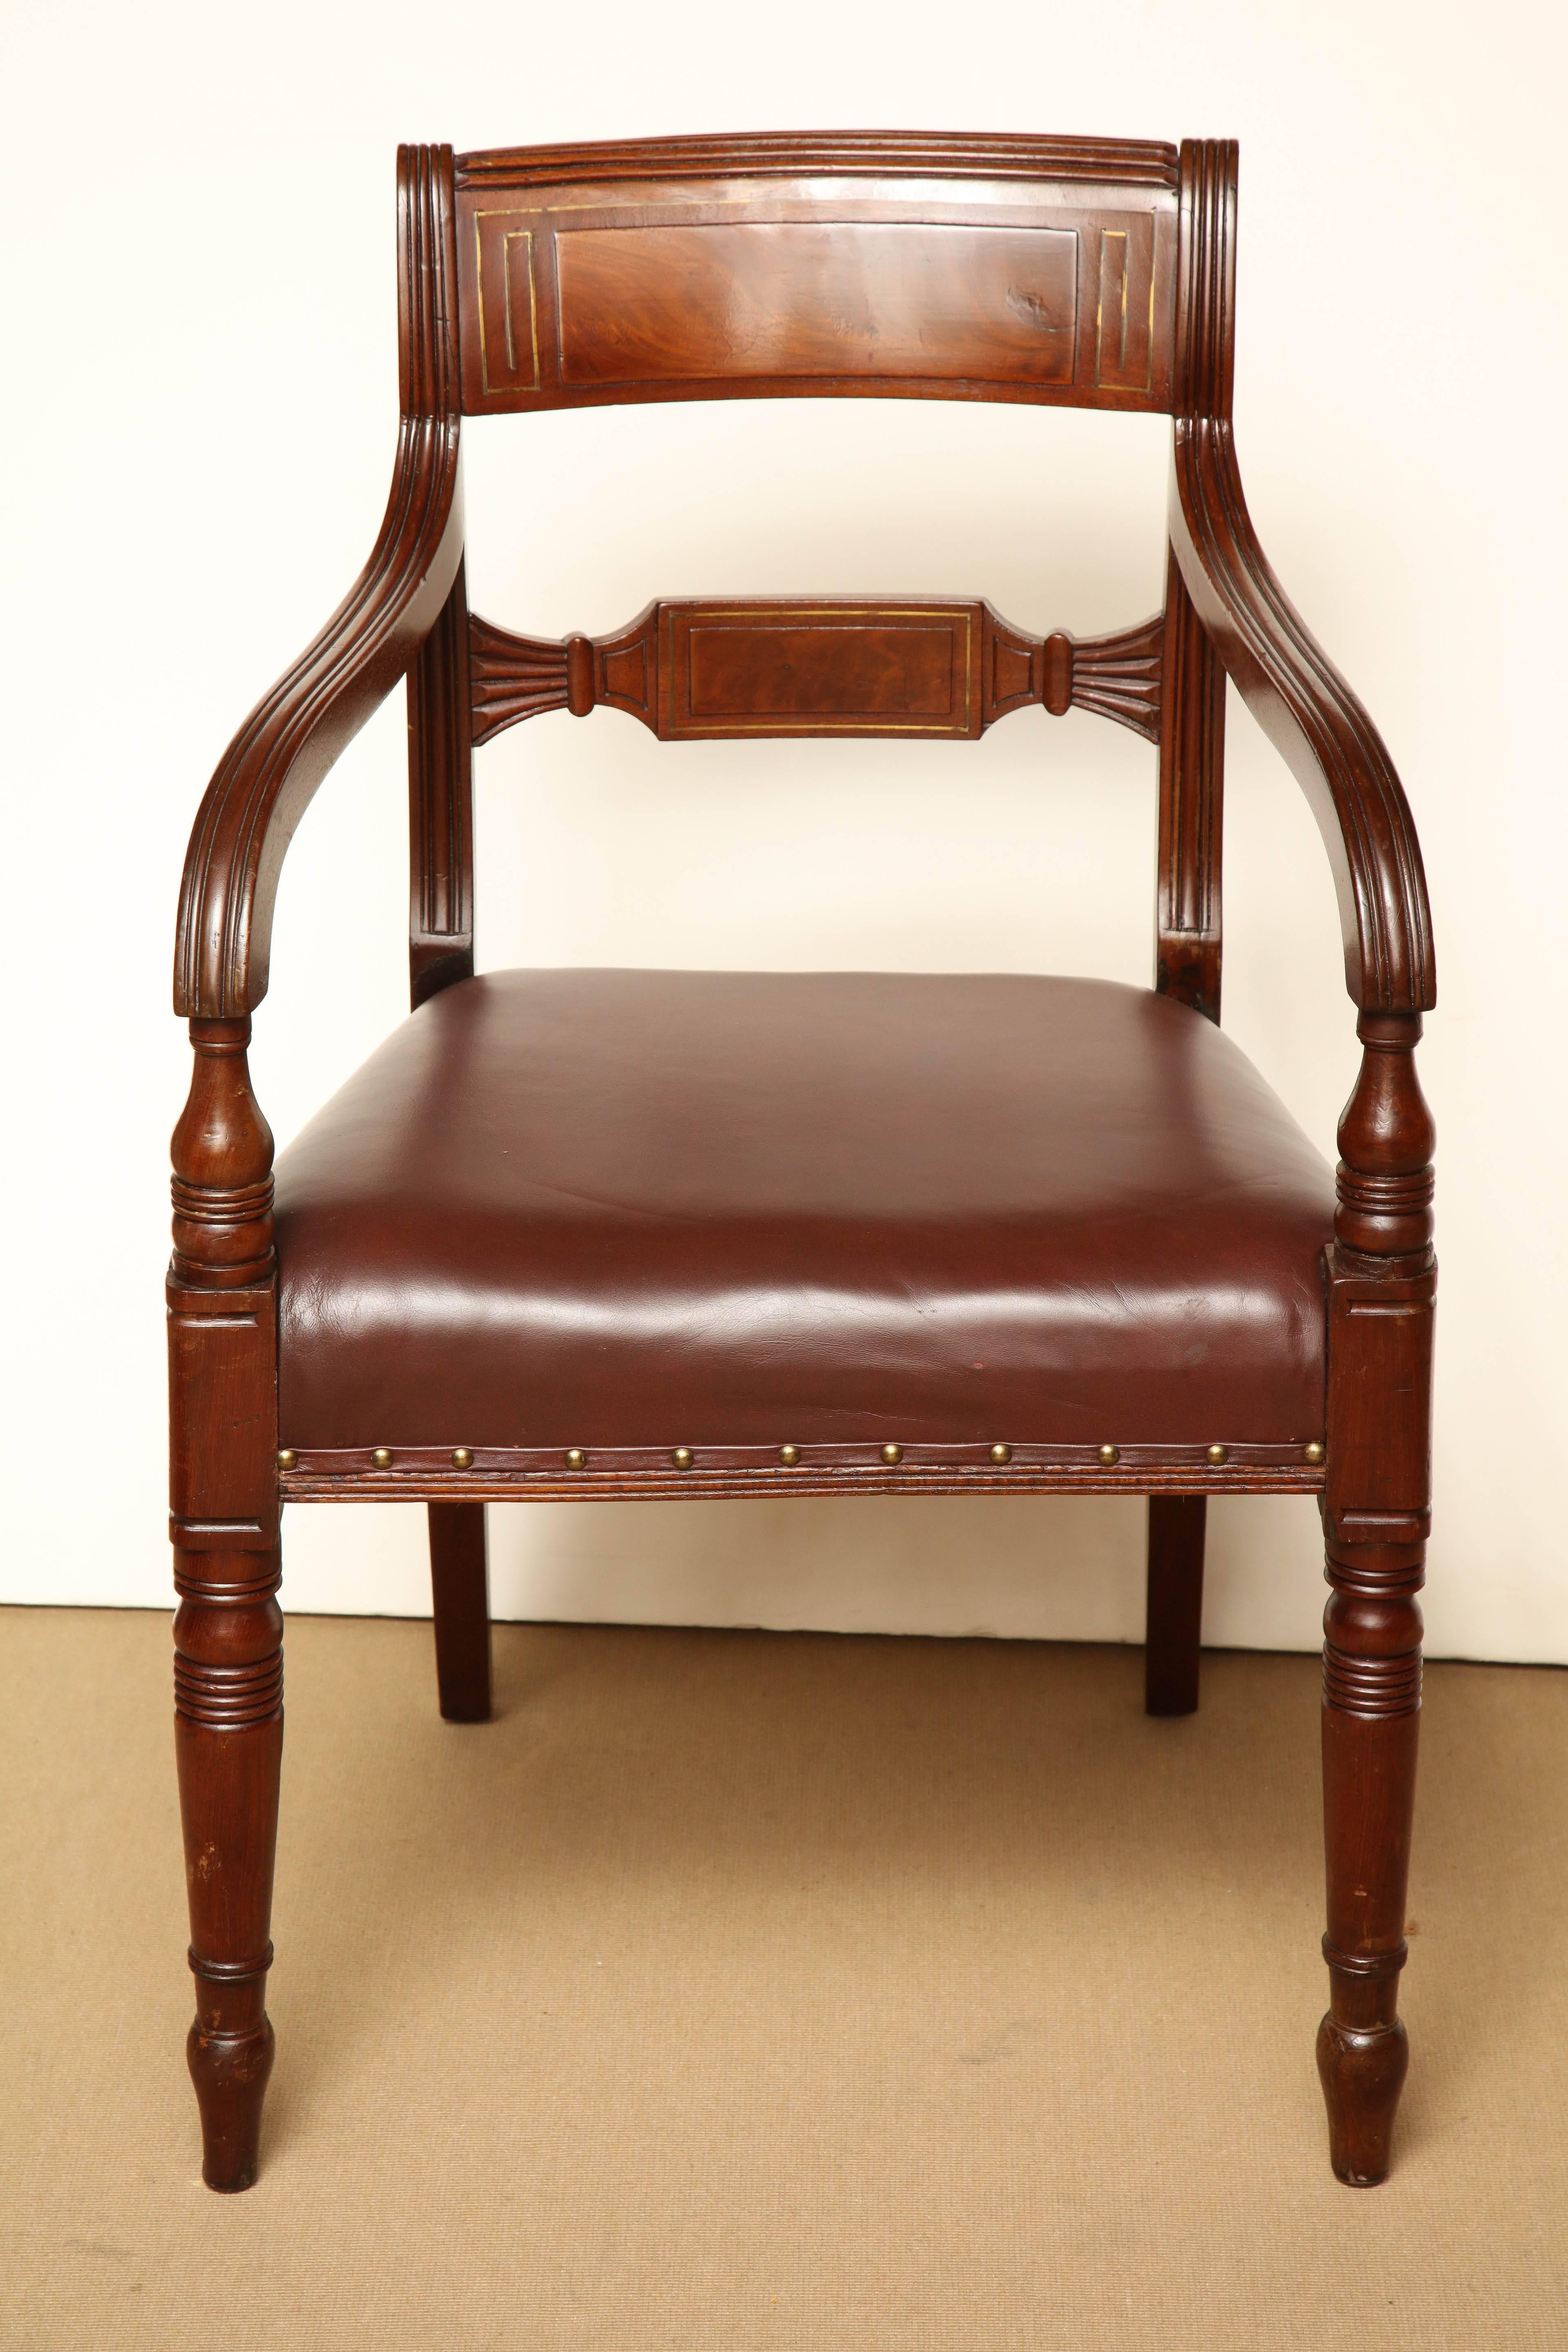 Early 19th century English Regency, mahogany and brass inlay desk chair.